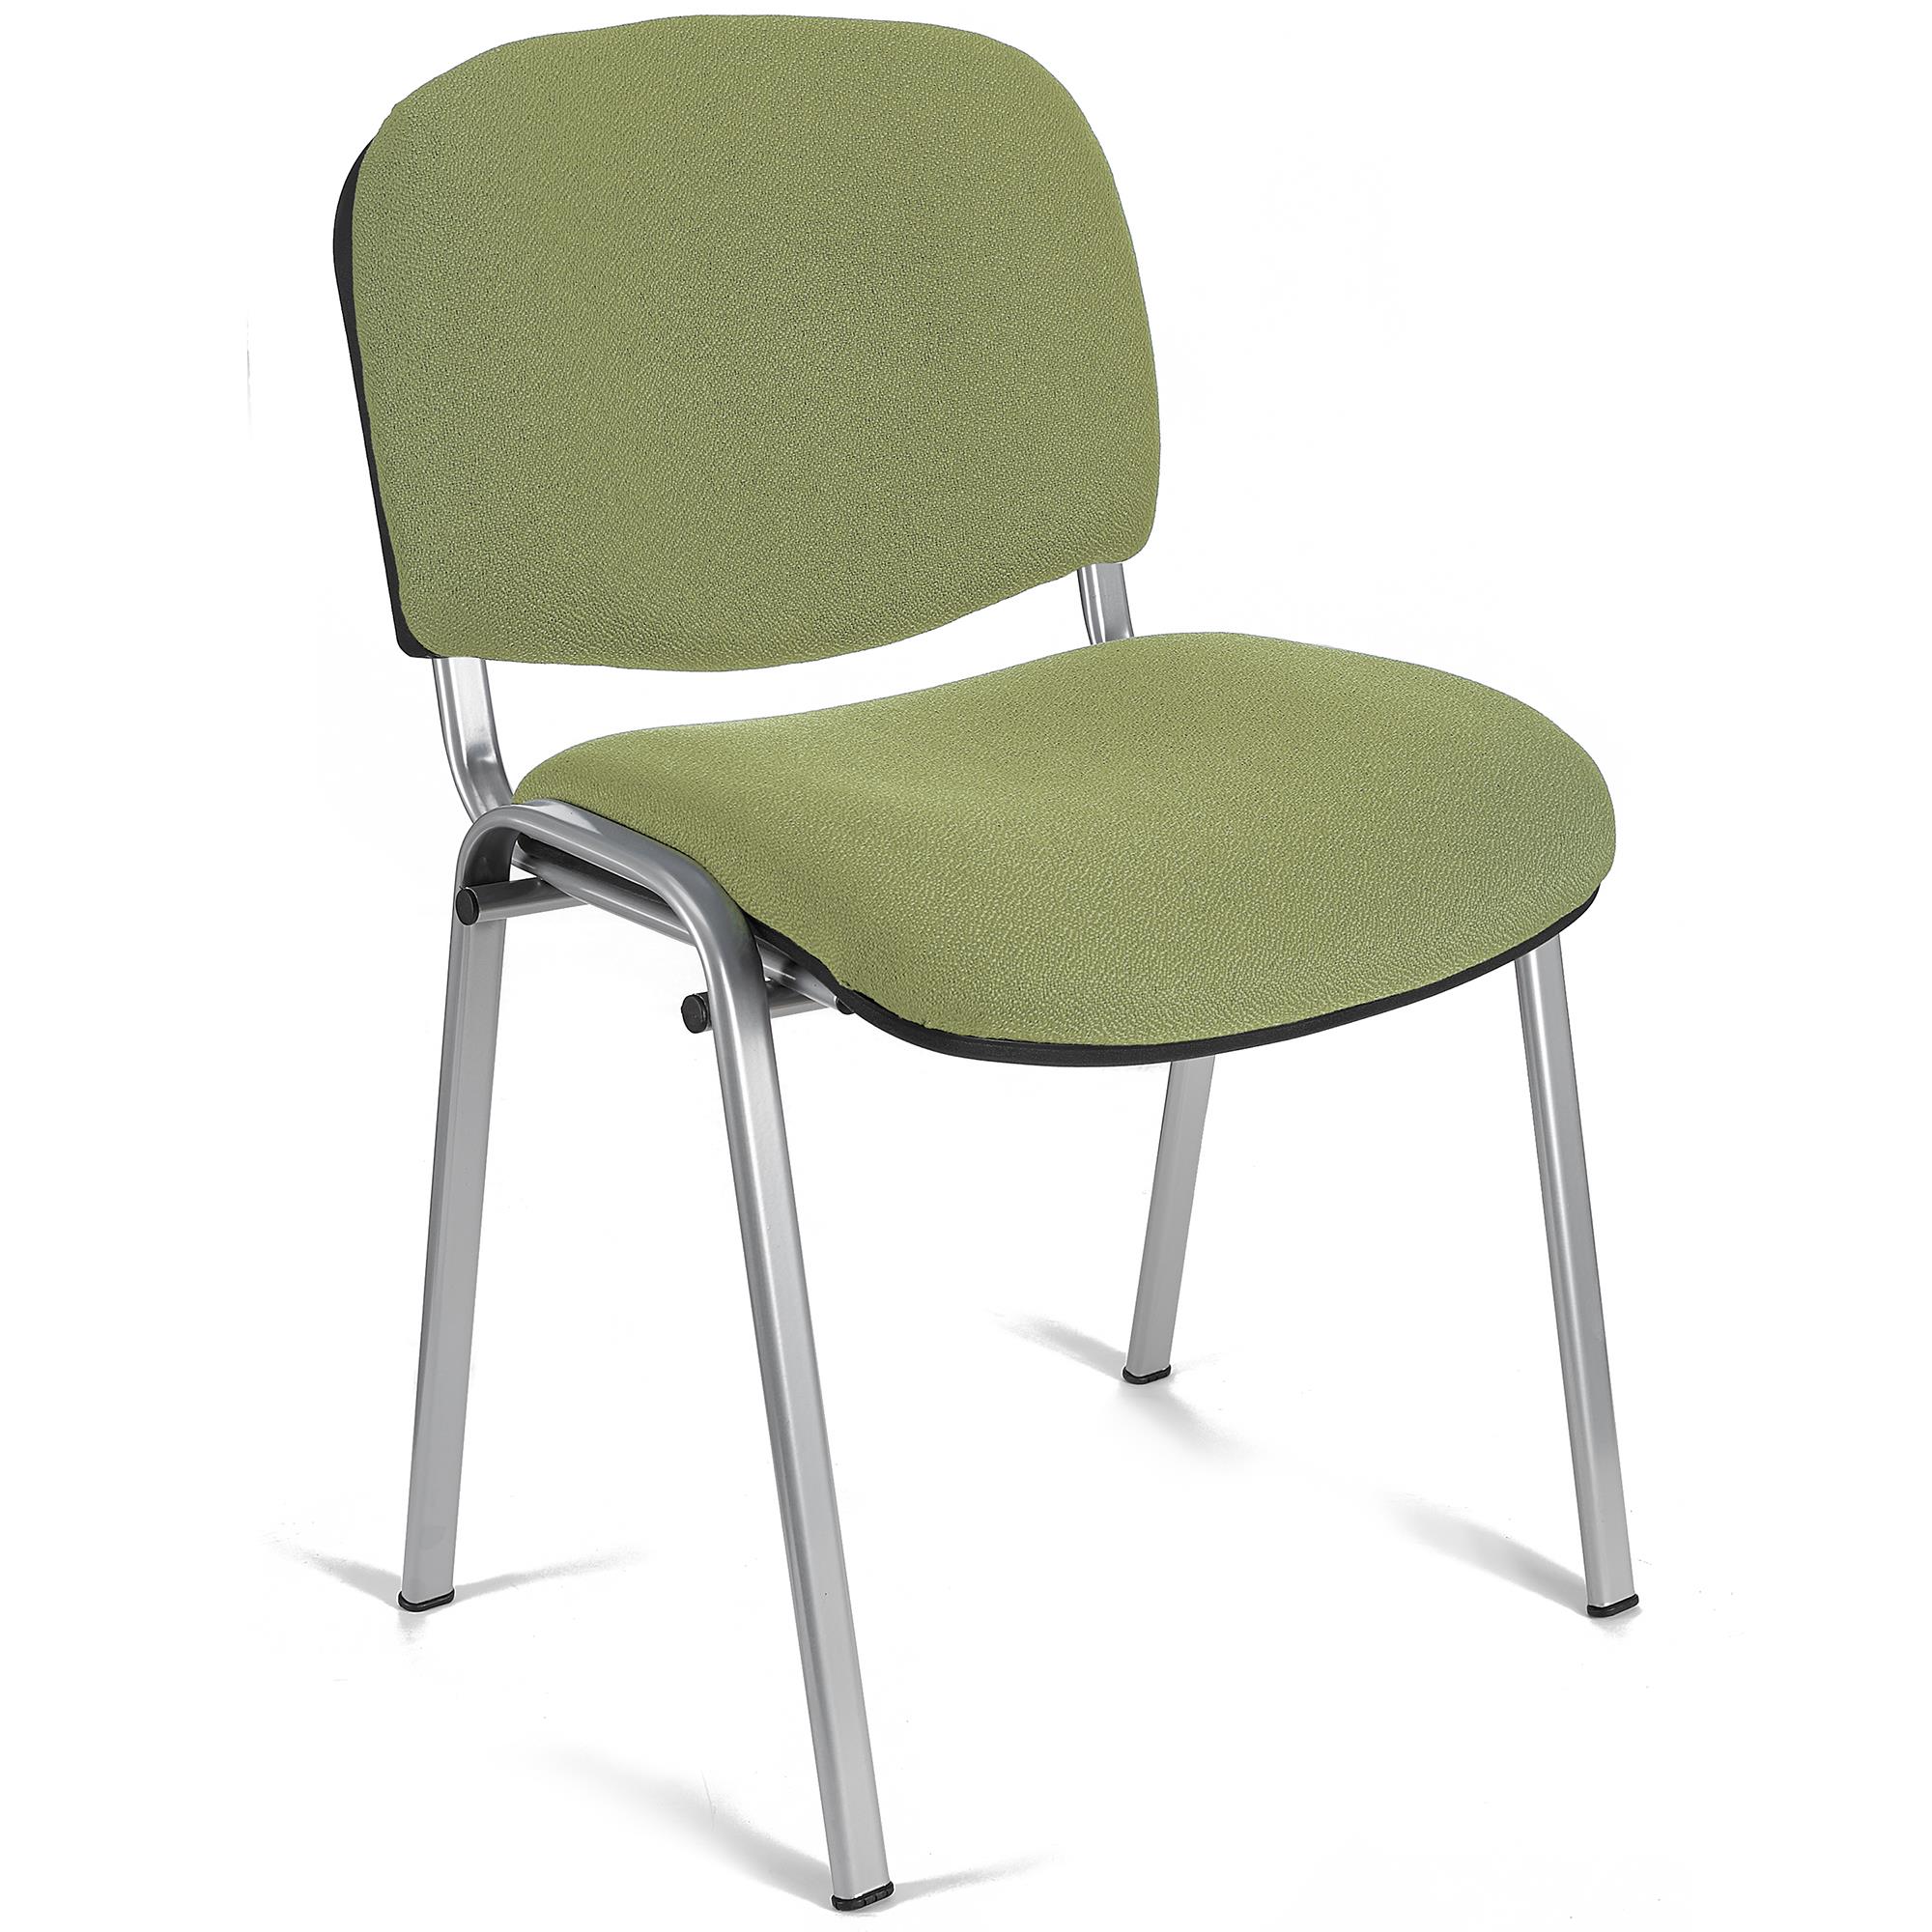 Cadeira de Visita MOBY BASE, Confortável e Prática, Pernas Cinza, Cor Verde